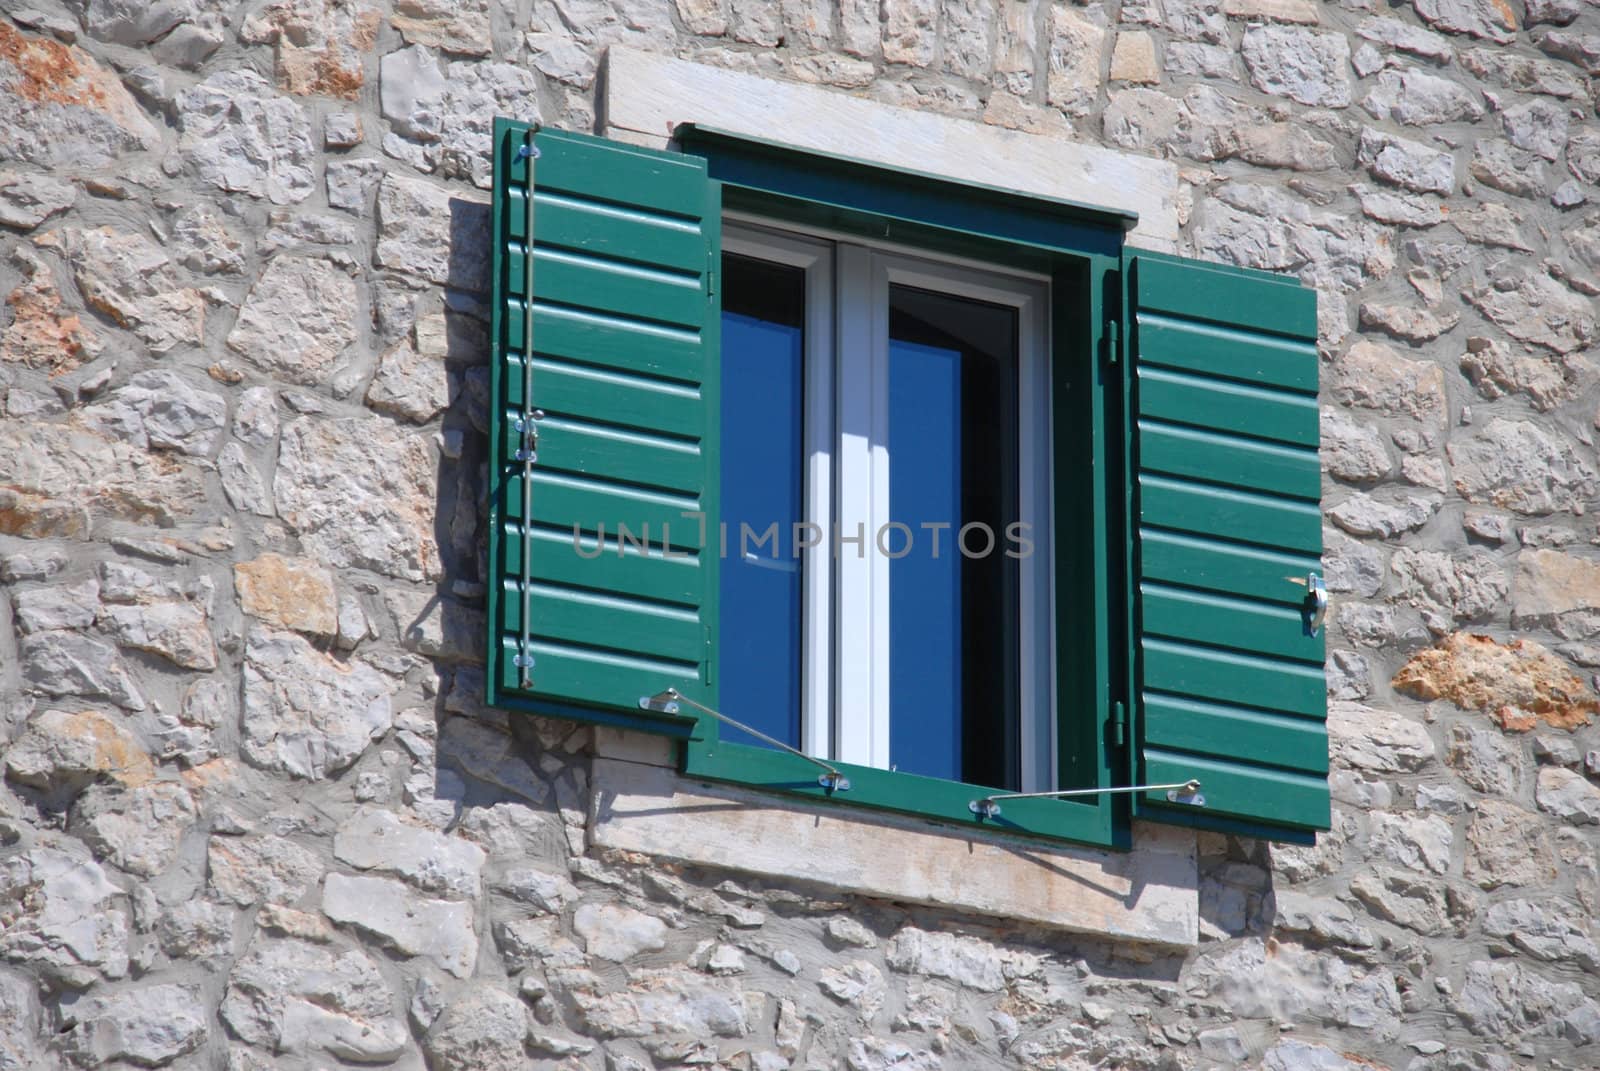 The open green shutter in the window. Croatia, Vodice.